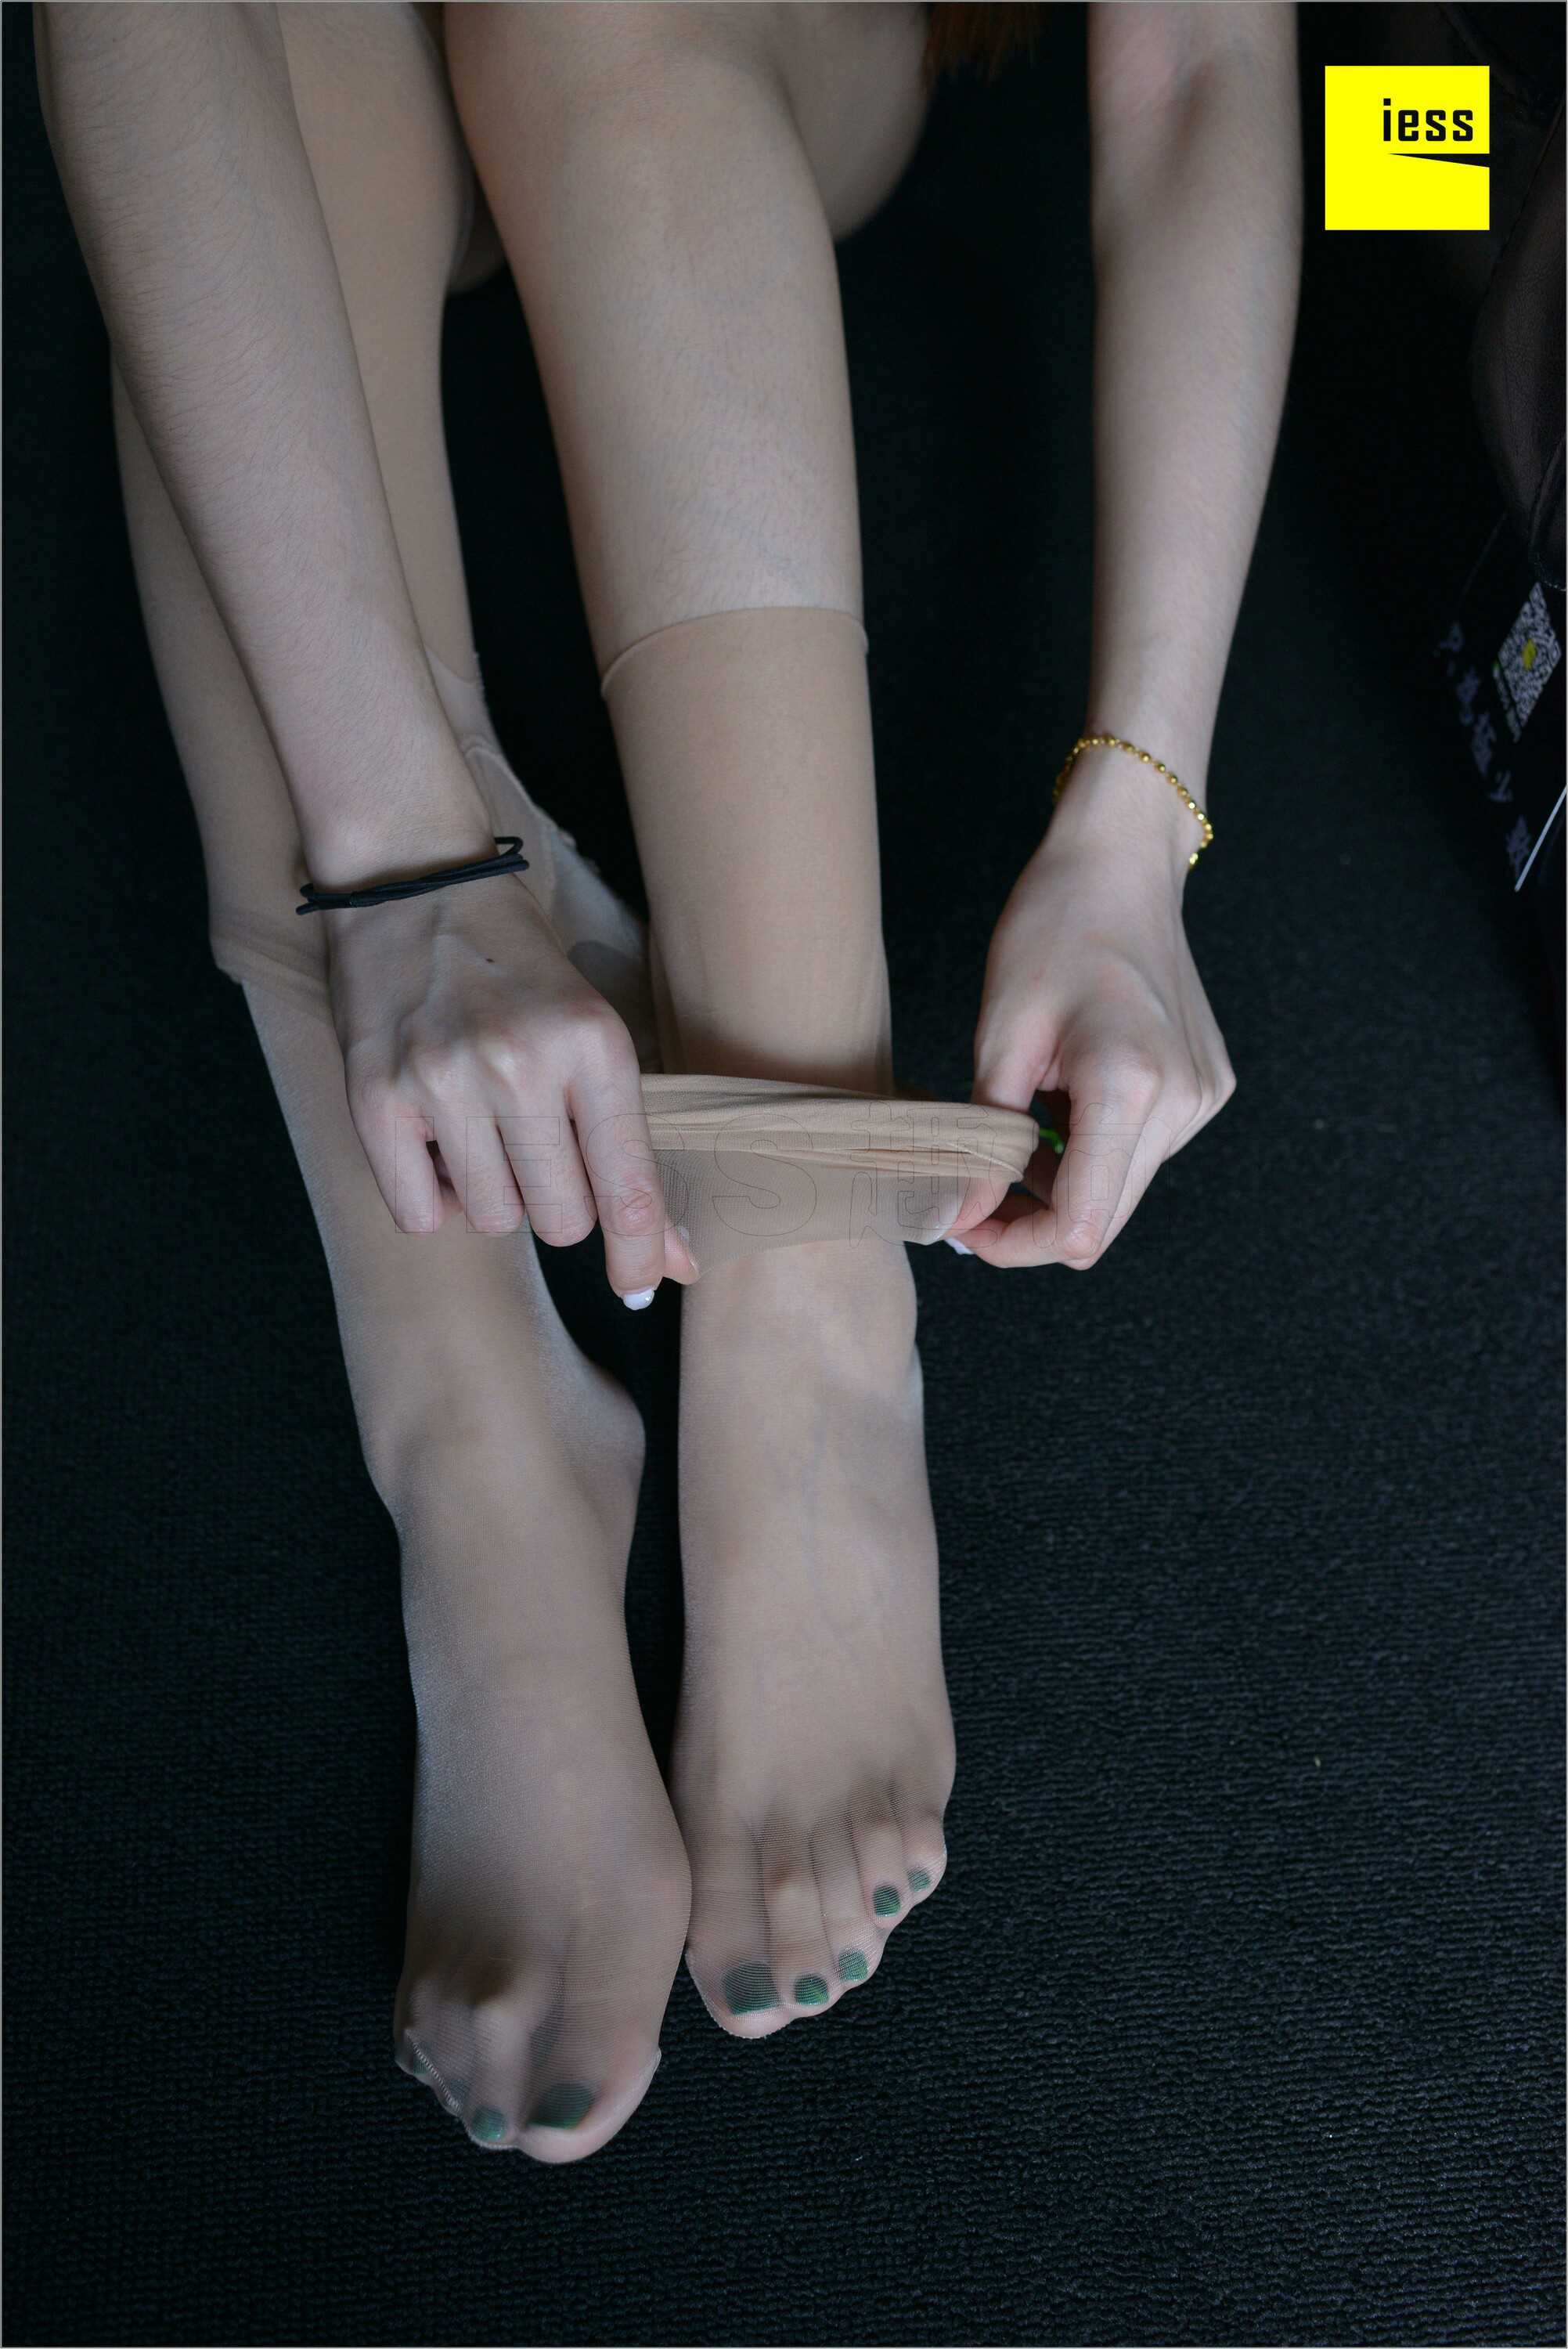 China Beauty Legs and feet 536